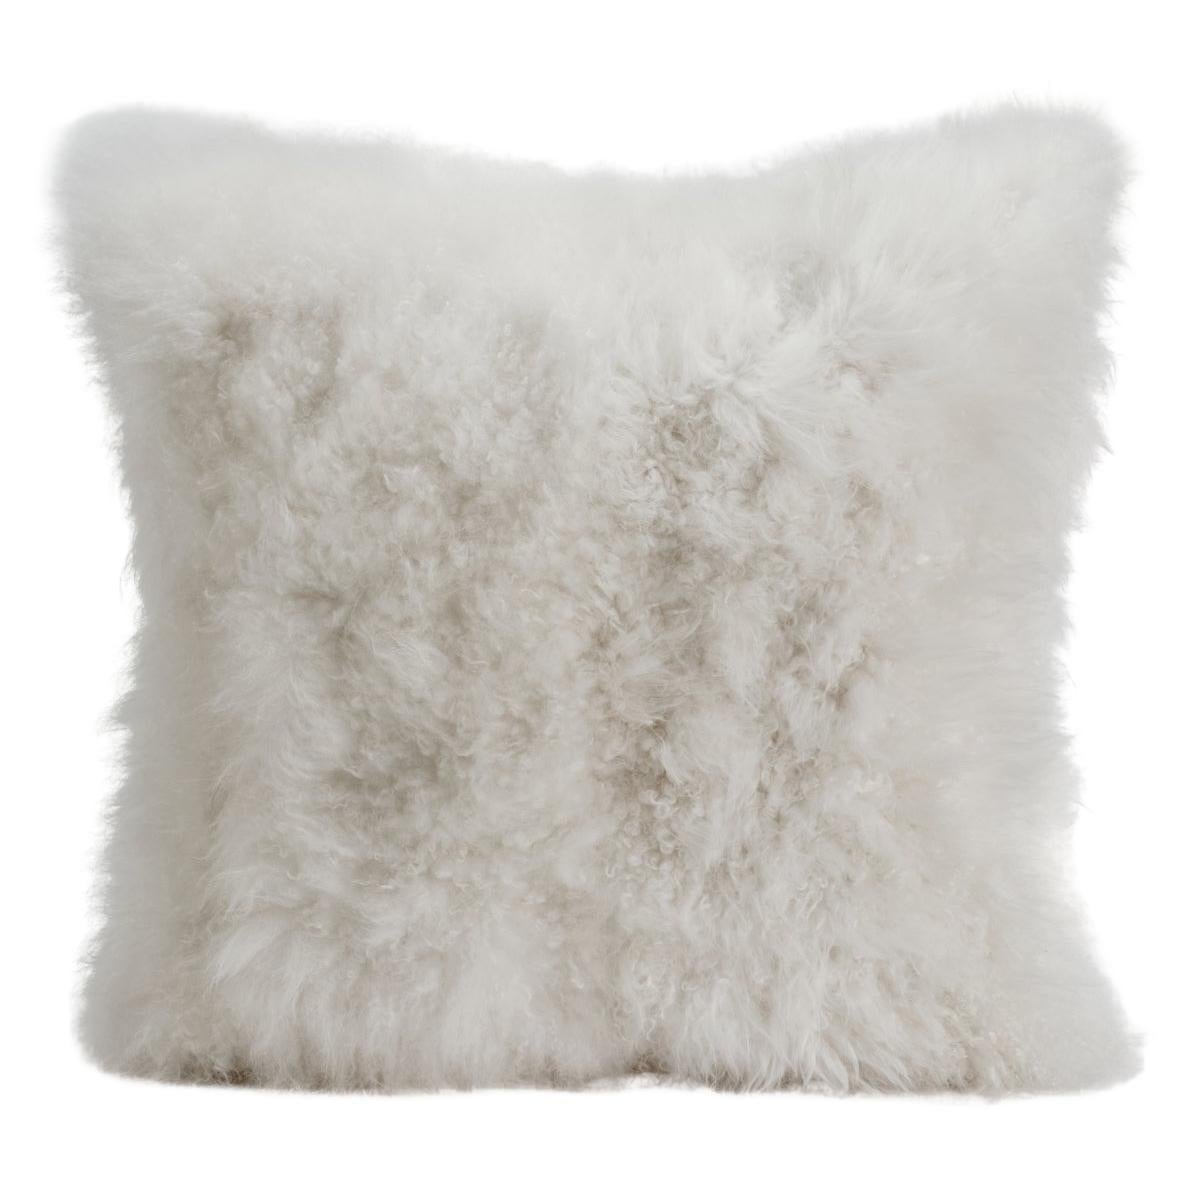 Big Cloud White Natural Cashmere Fur Pillow Cushion by Muchi Decor For Sale